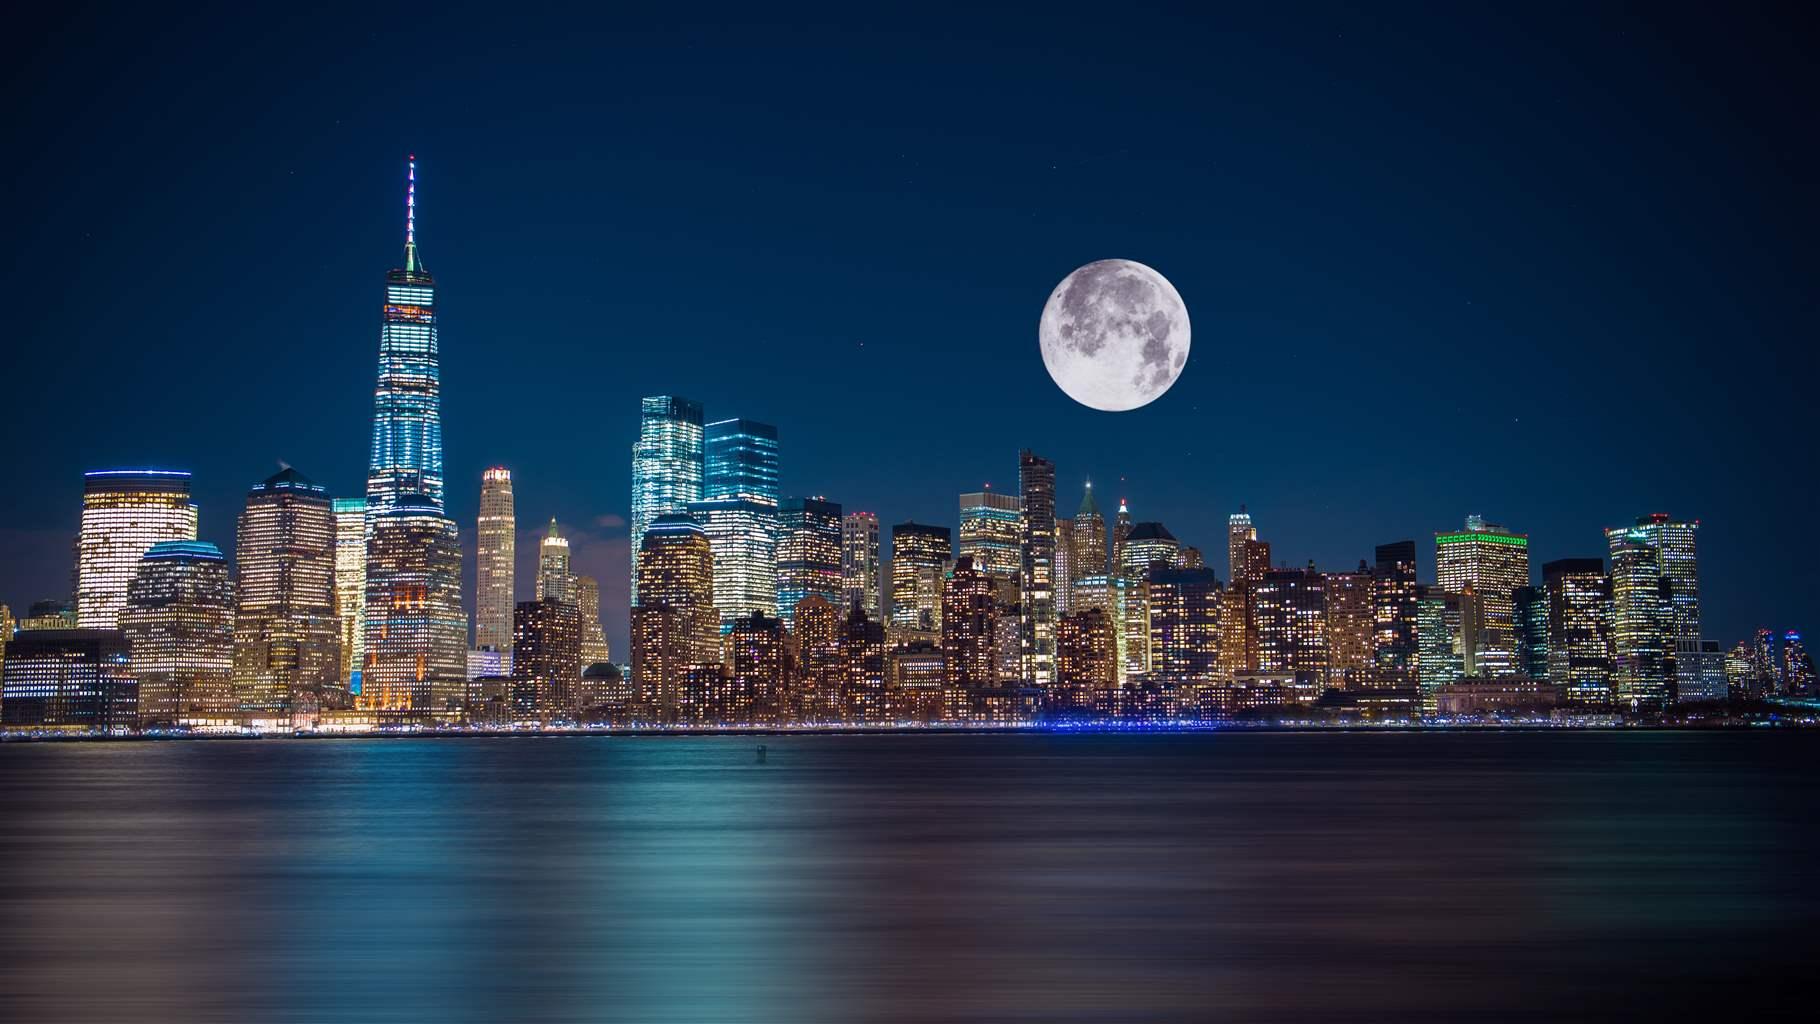 New York City Skyline and the Moon